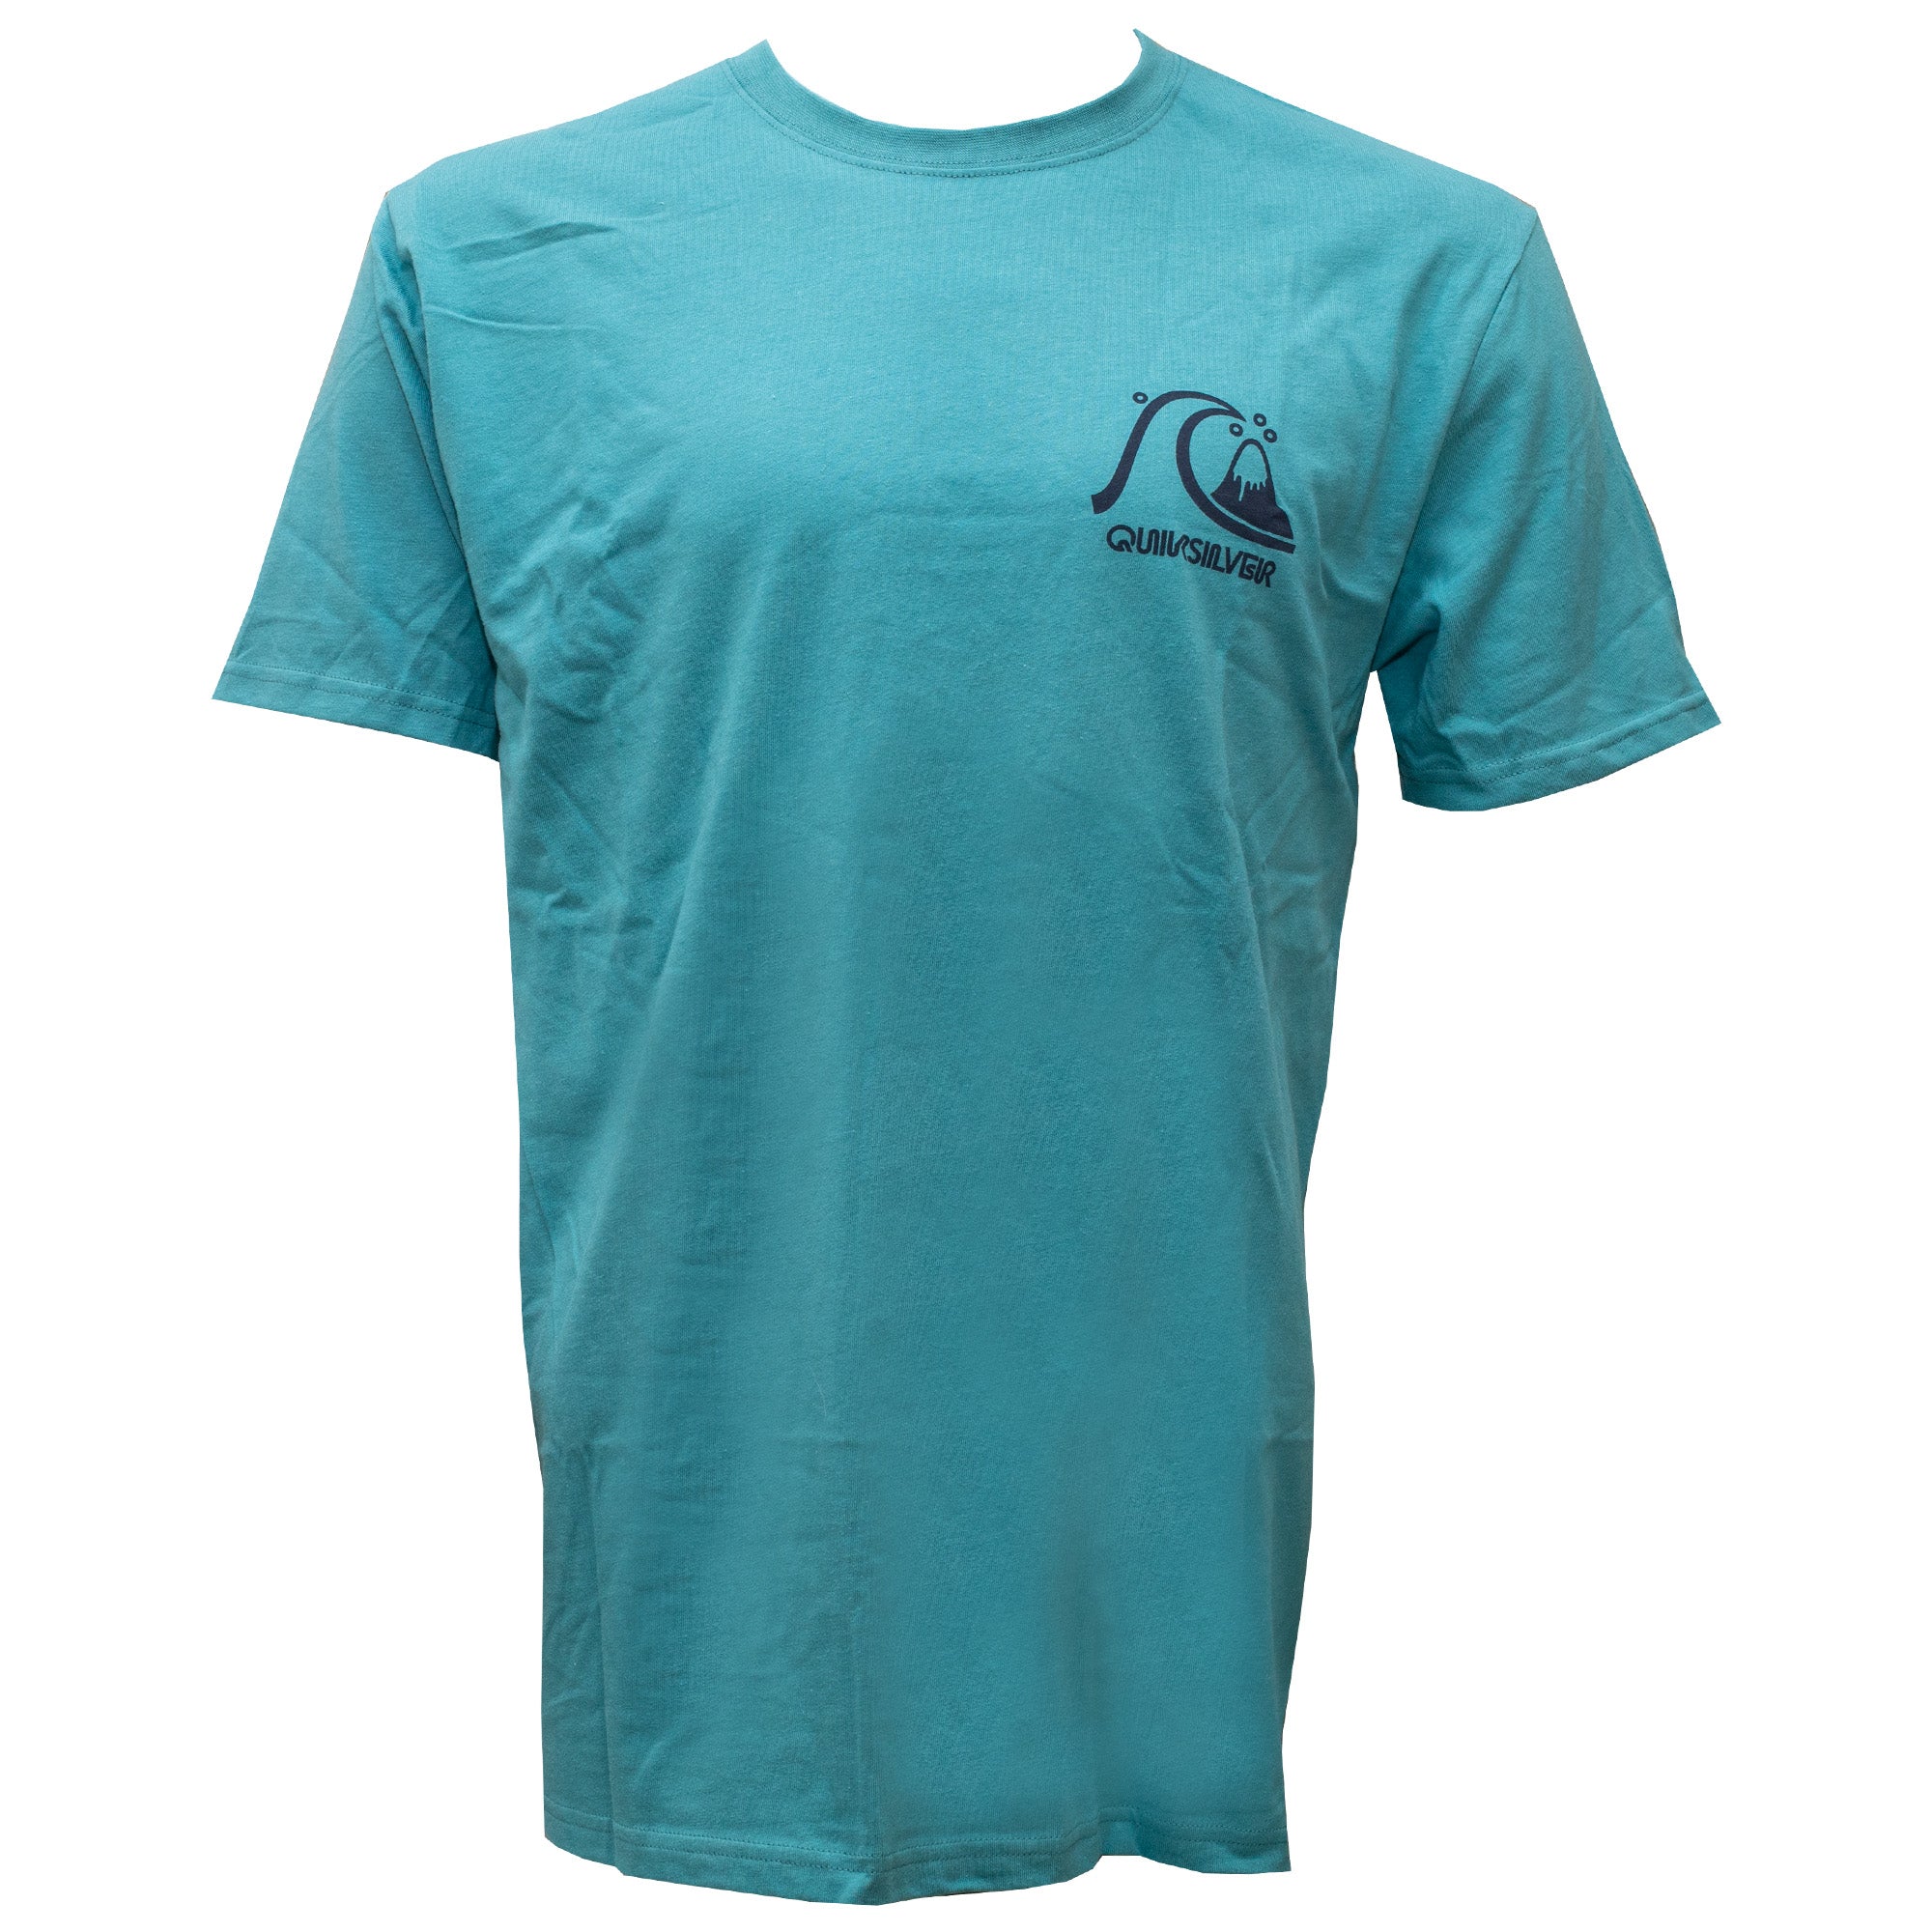 Quiksilver The Original Men's S/S T-Shirt